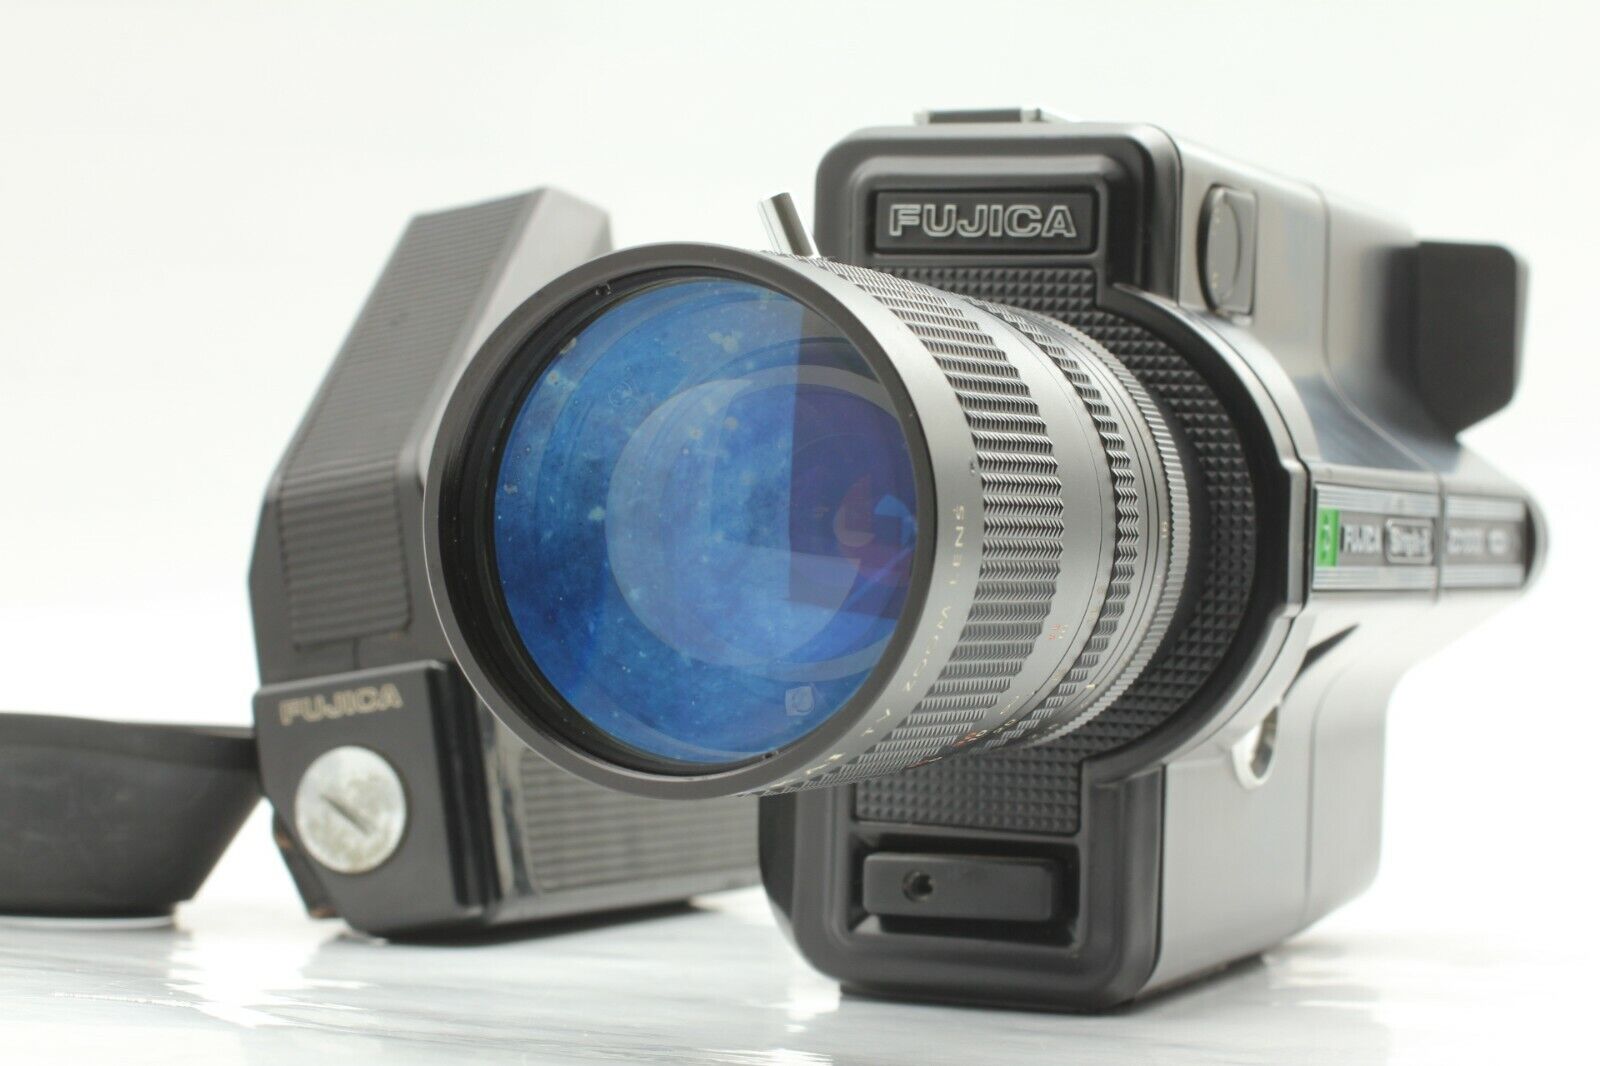 [read/exc+4] Fuji Fujica Zc-1000 Single-8 8mm Filmcamera From Japan #a0034